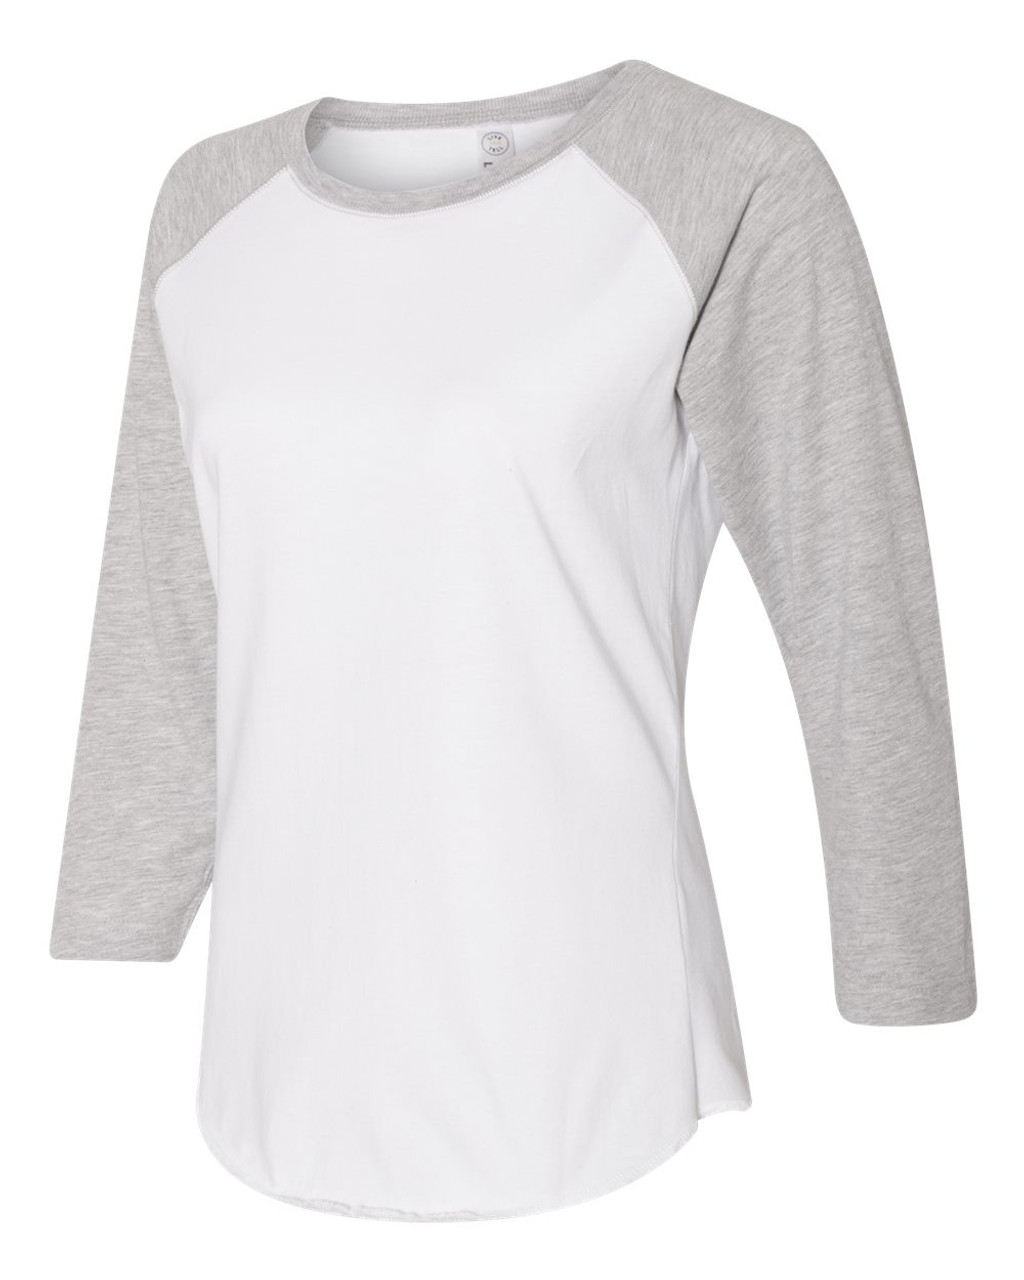 St. Louis Cardinals Majestic Threads Women's Raglan 3/4-Sleeve T-Shirt -  White/Camo